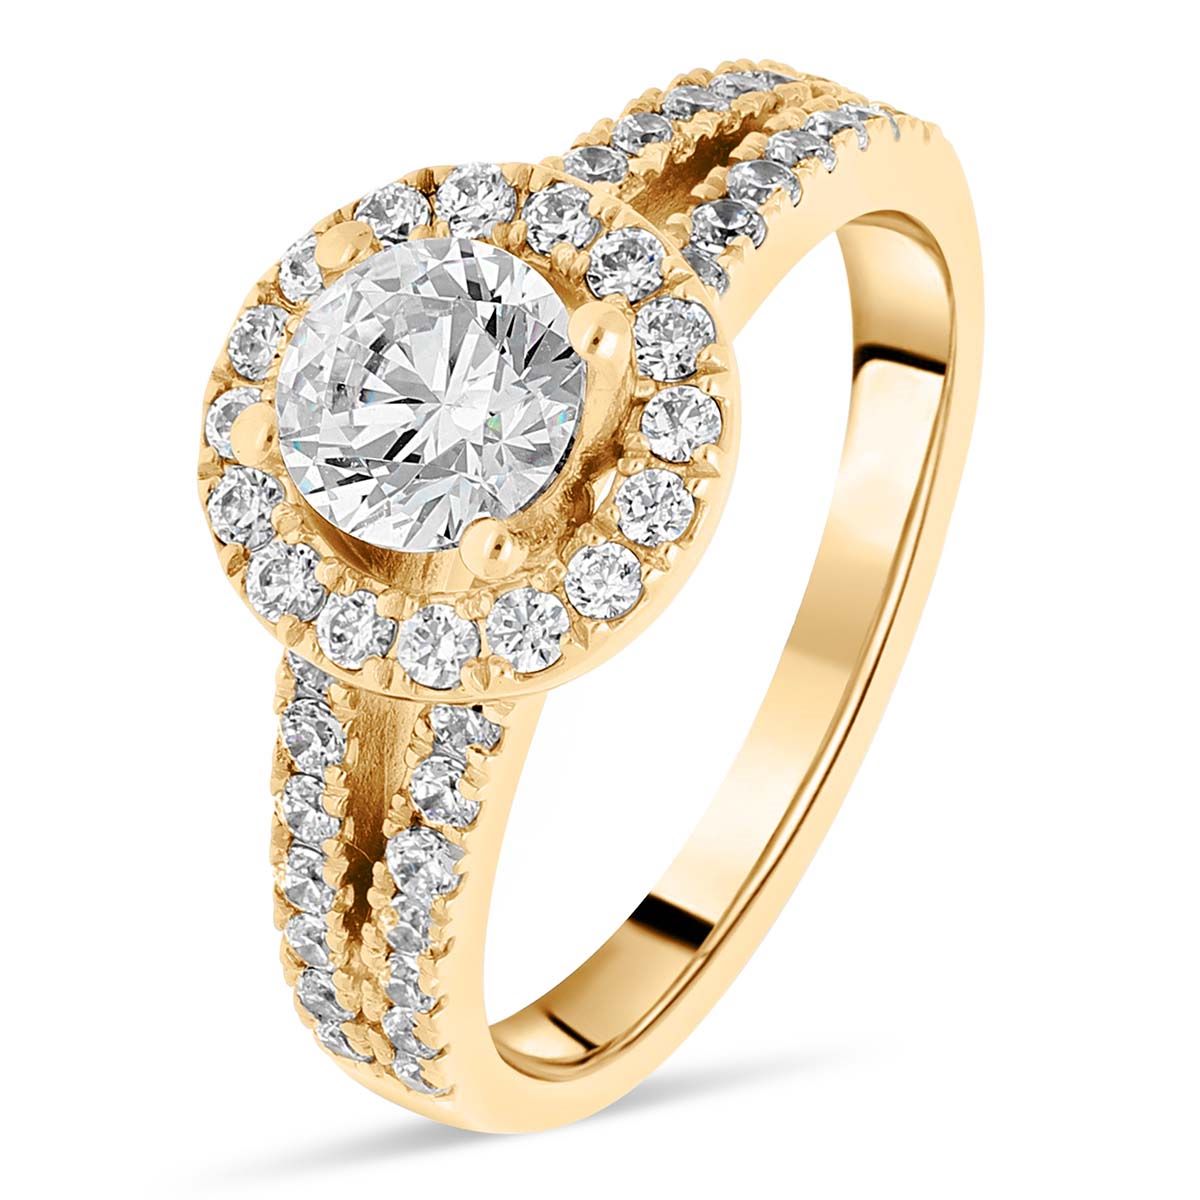 caiman-solitaires-diamants-certifies-entourage-or-jaune-750-